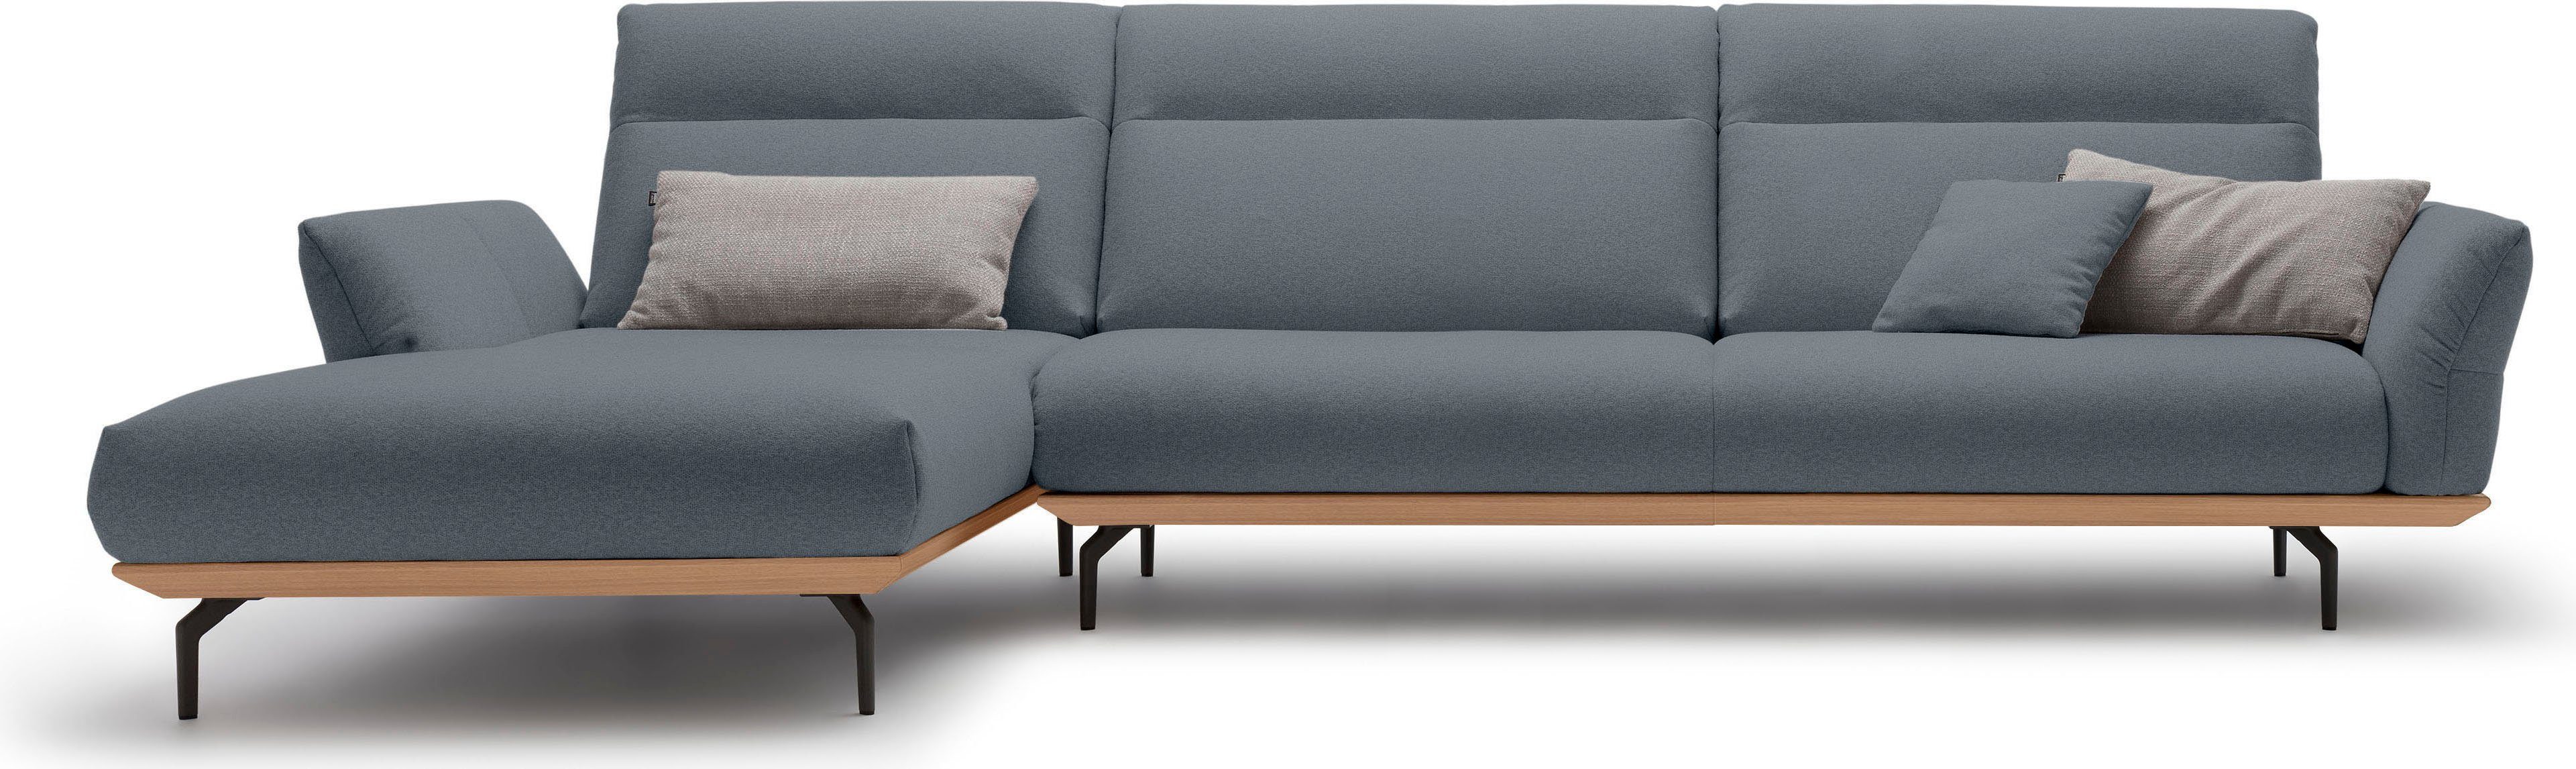 hülsta sofa Ecksofa hs.460, Sockel in Eiche, Winkelfüße in Umbragrau, Breite 338 cm